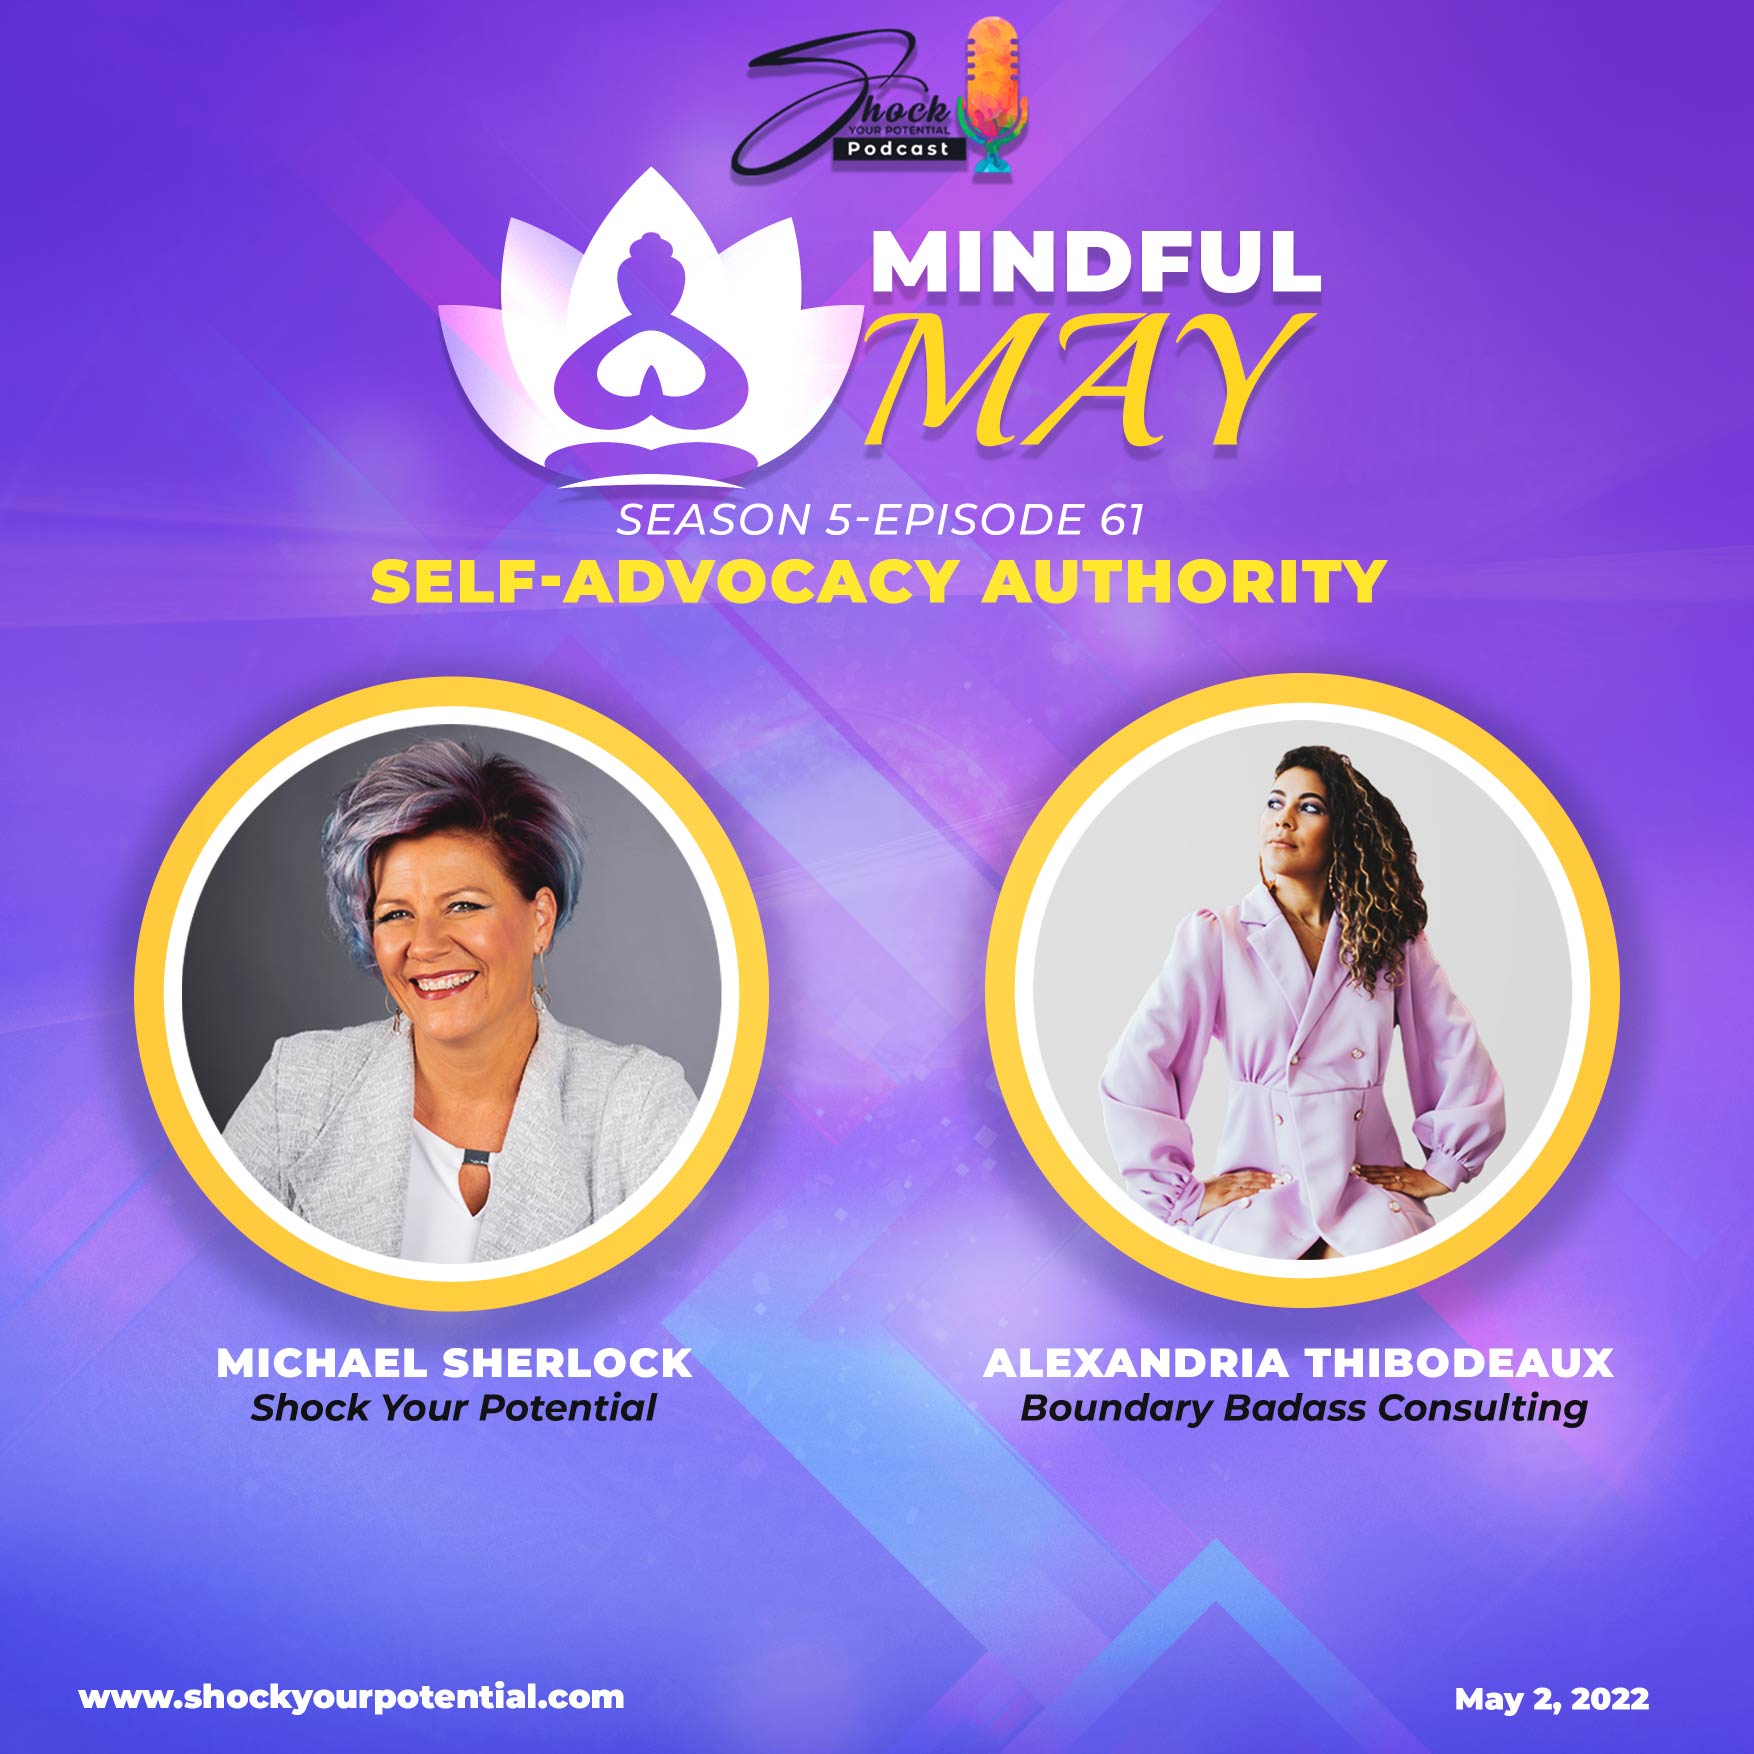 Self -Advocacy Authority – Alexandria Thibodeaux